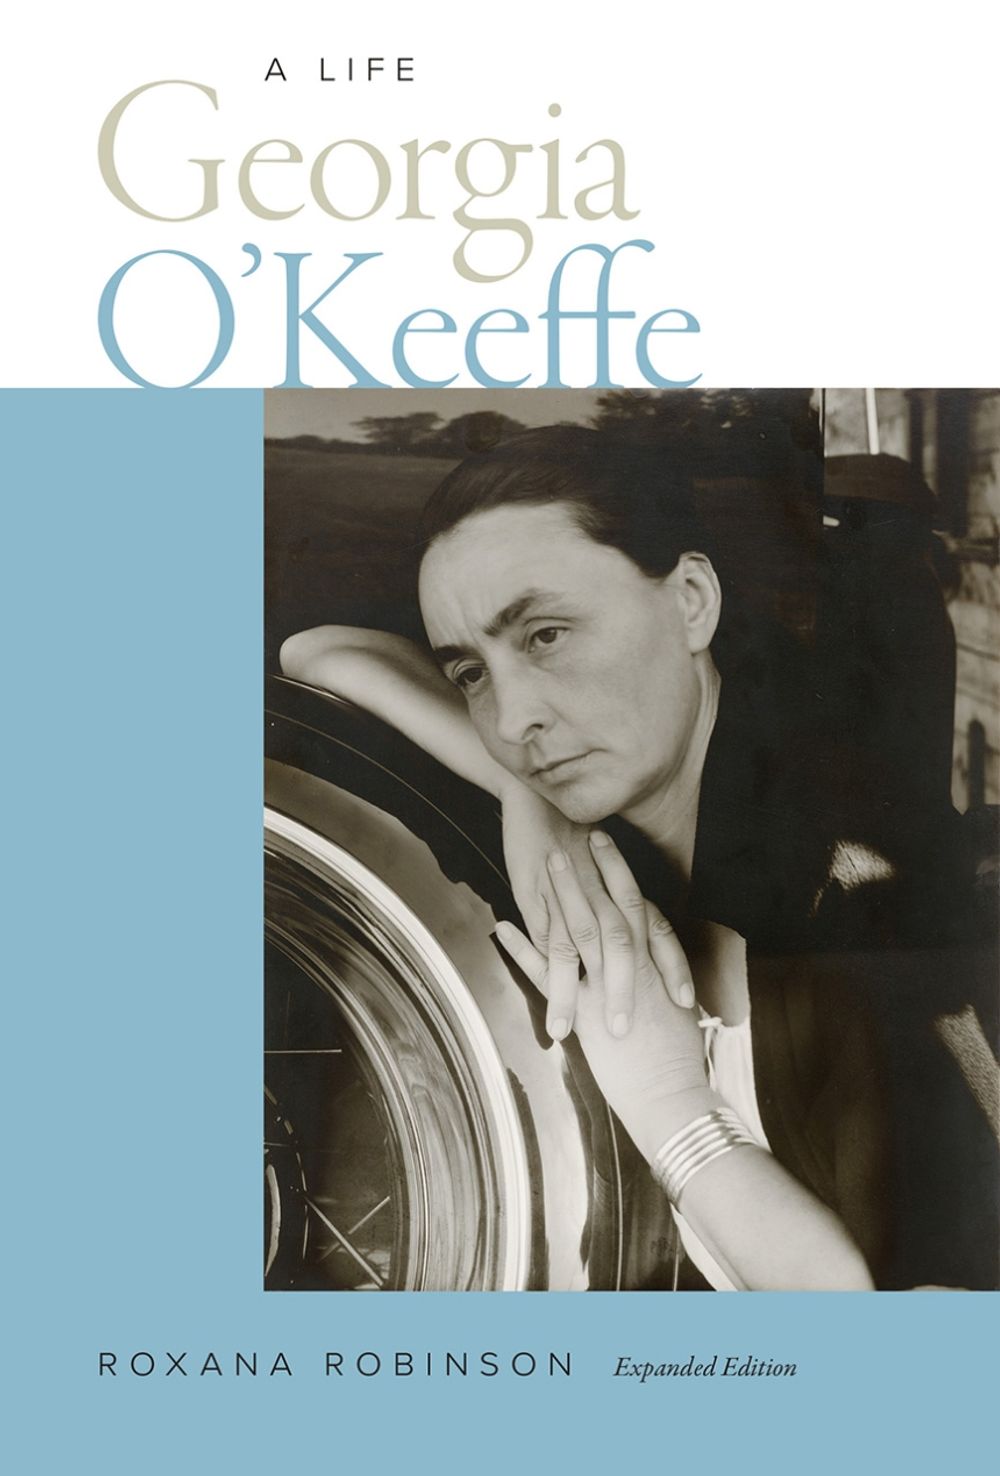 cover image of the book Georgia O’Keeffe: A Life